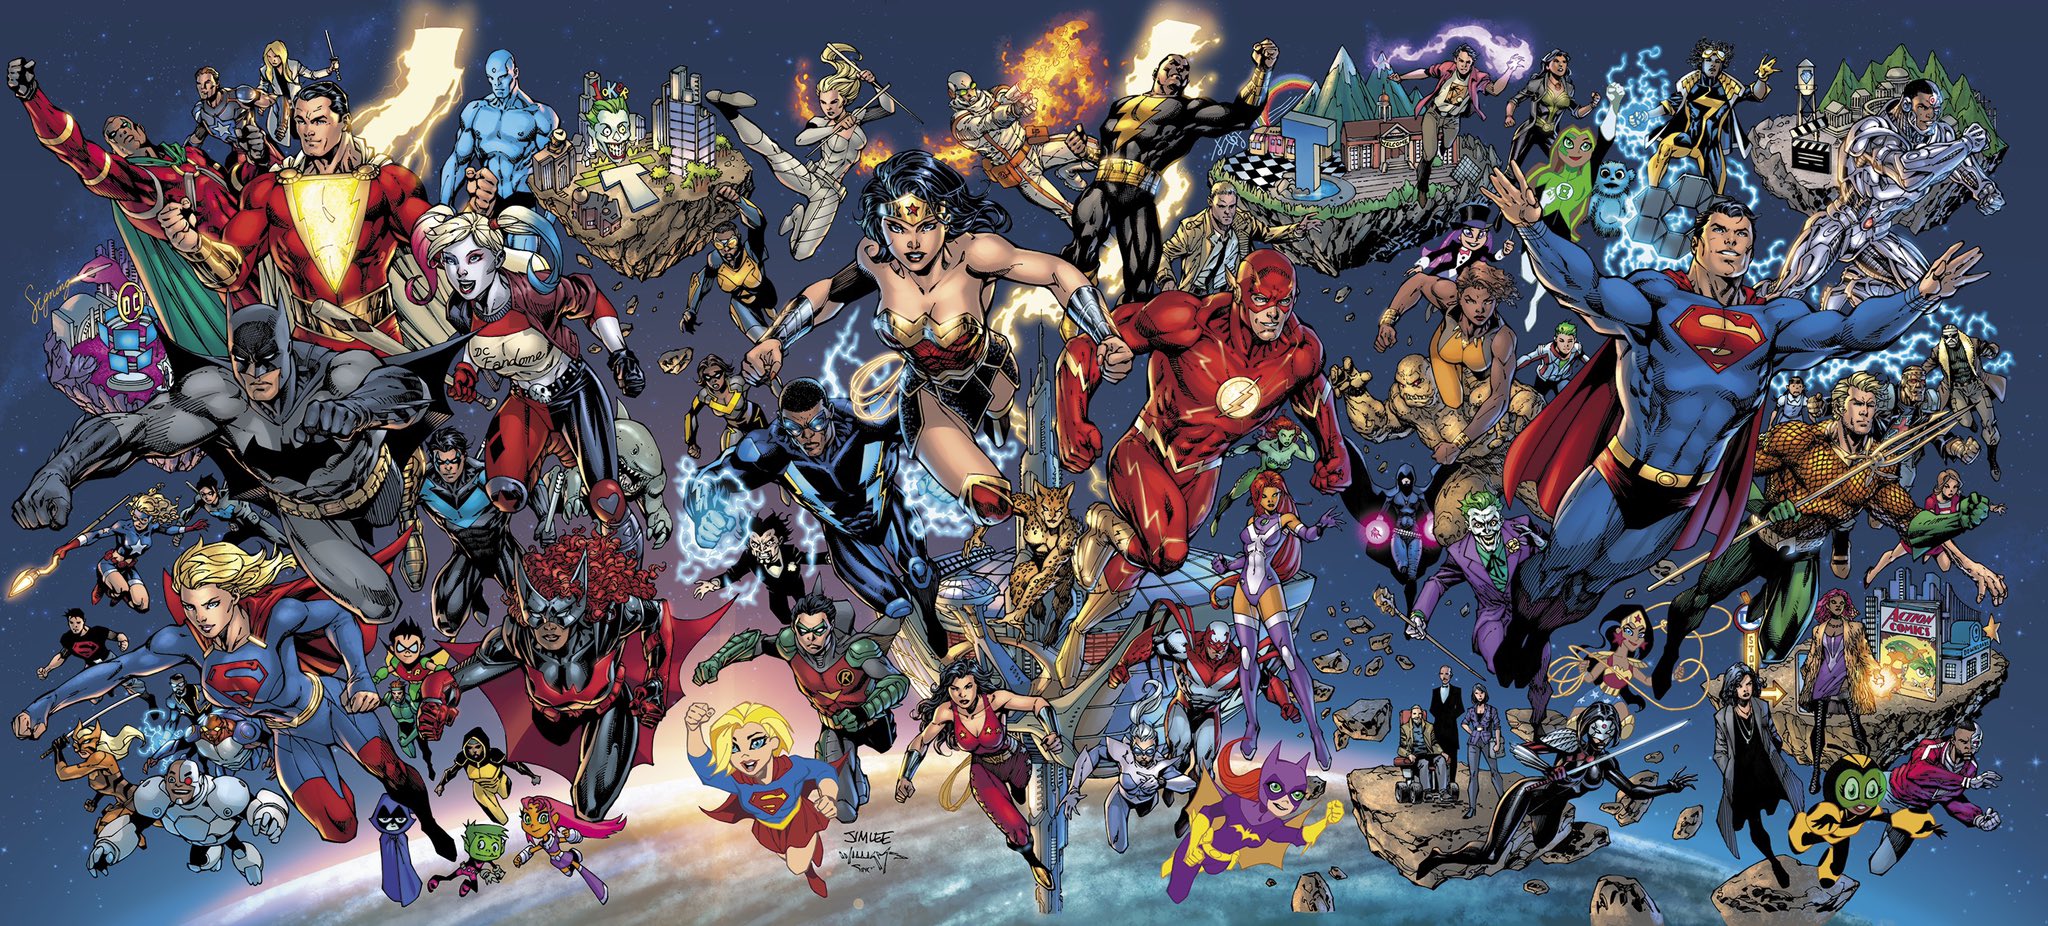 DC Comics Art by Jim Lee